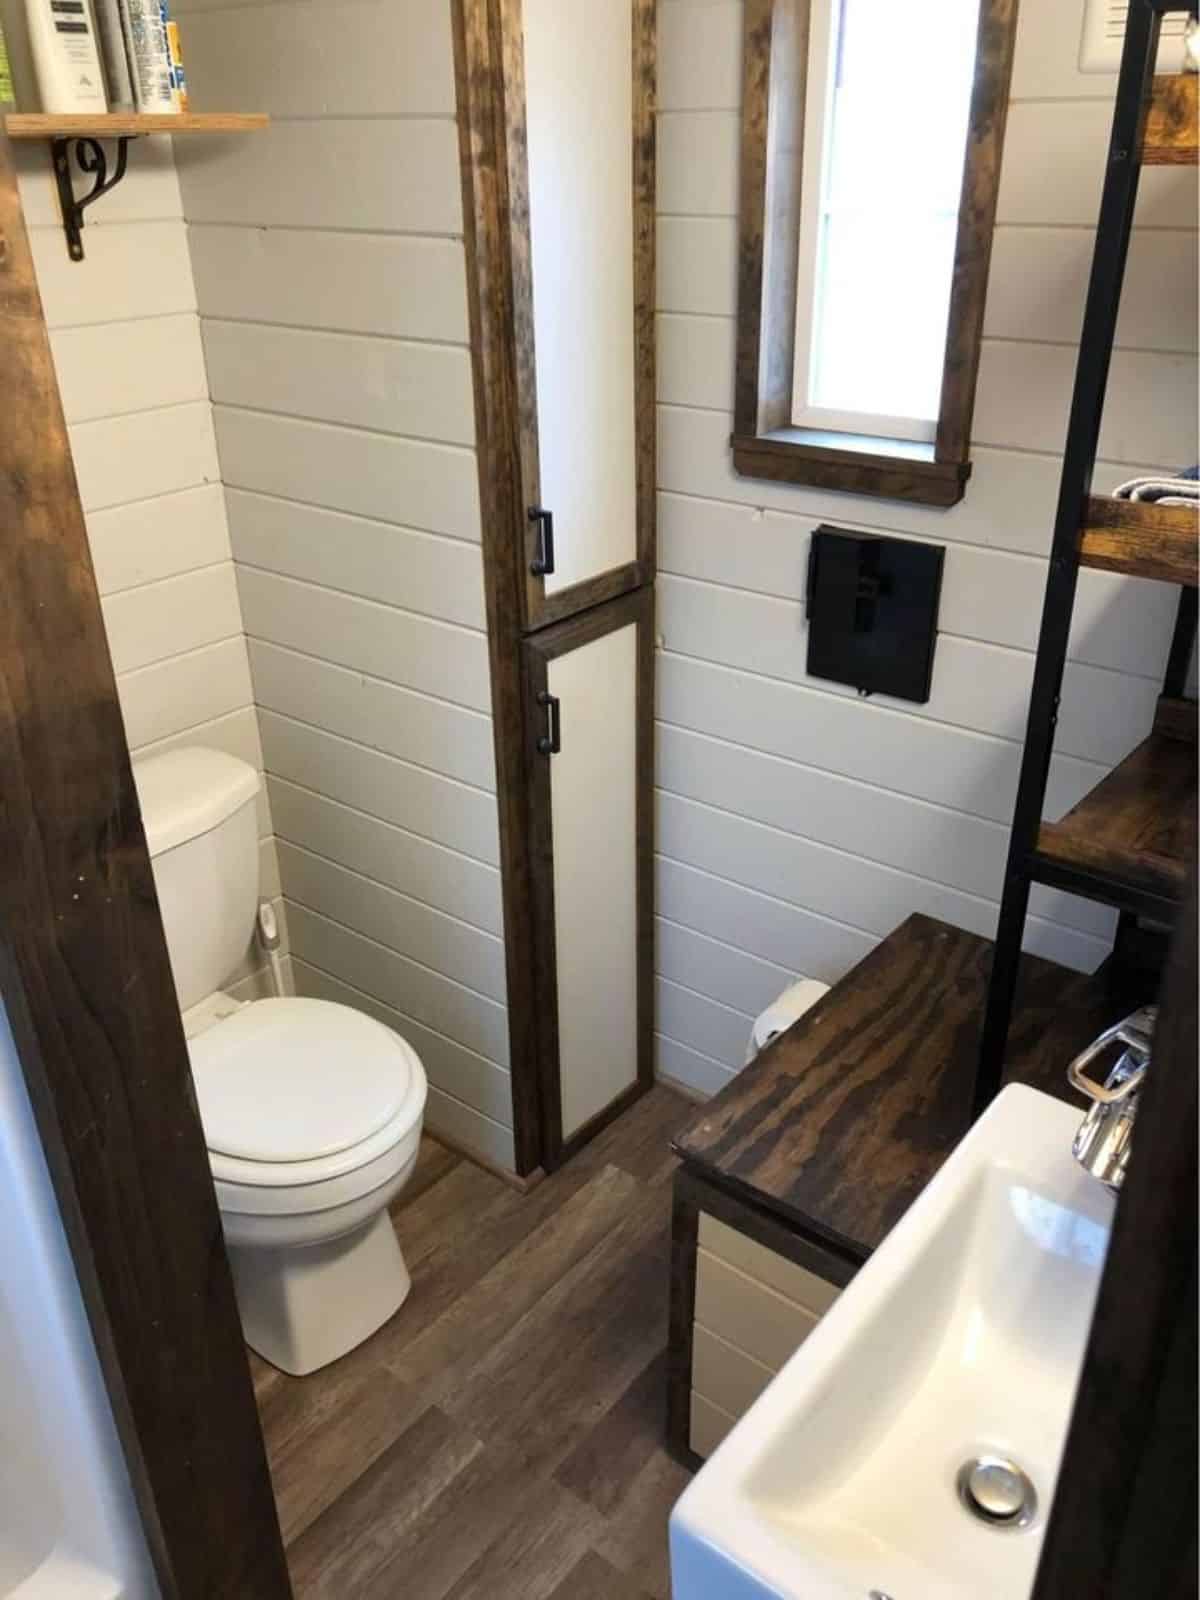 Standard toilet, sink with mirror in bathroom